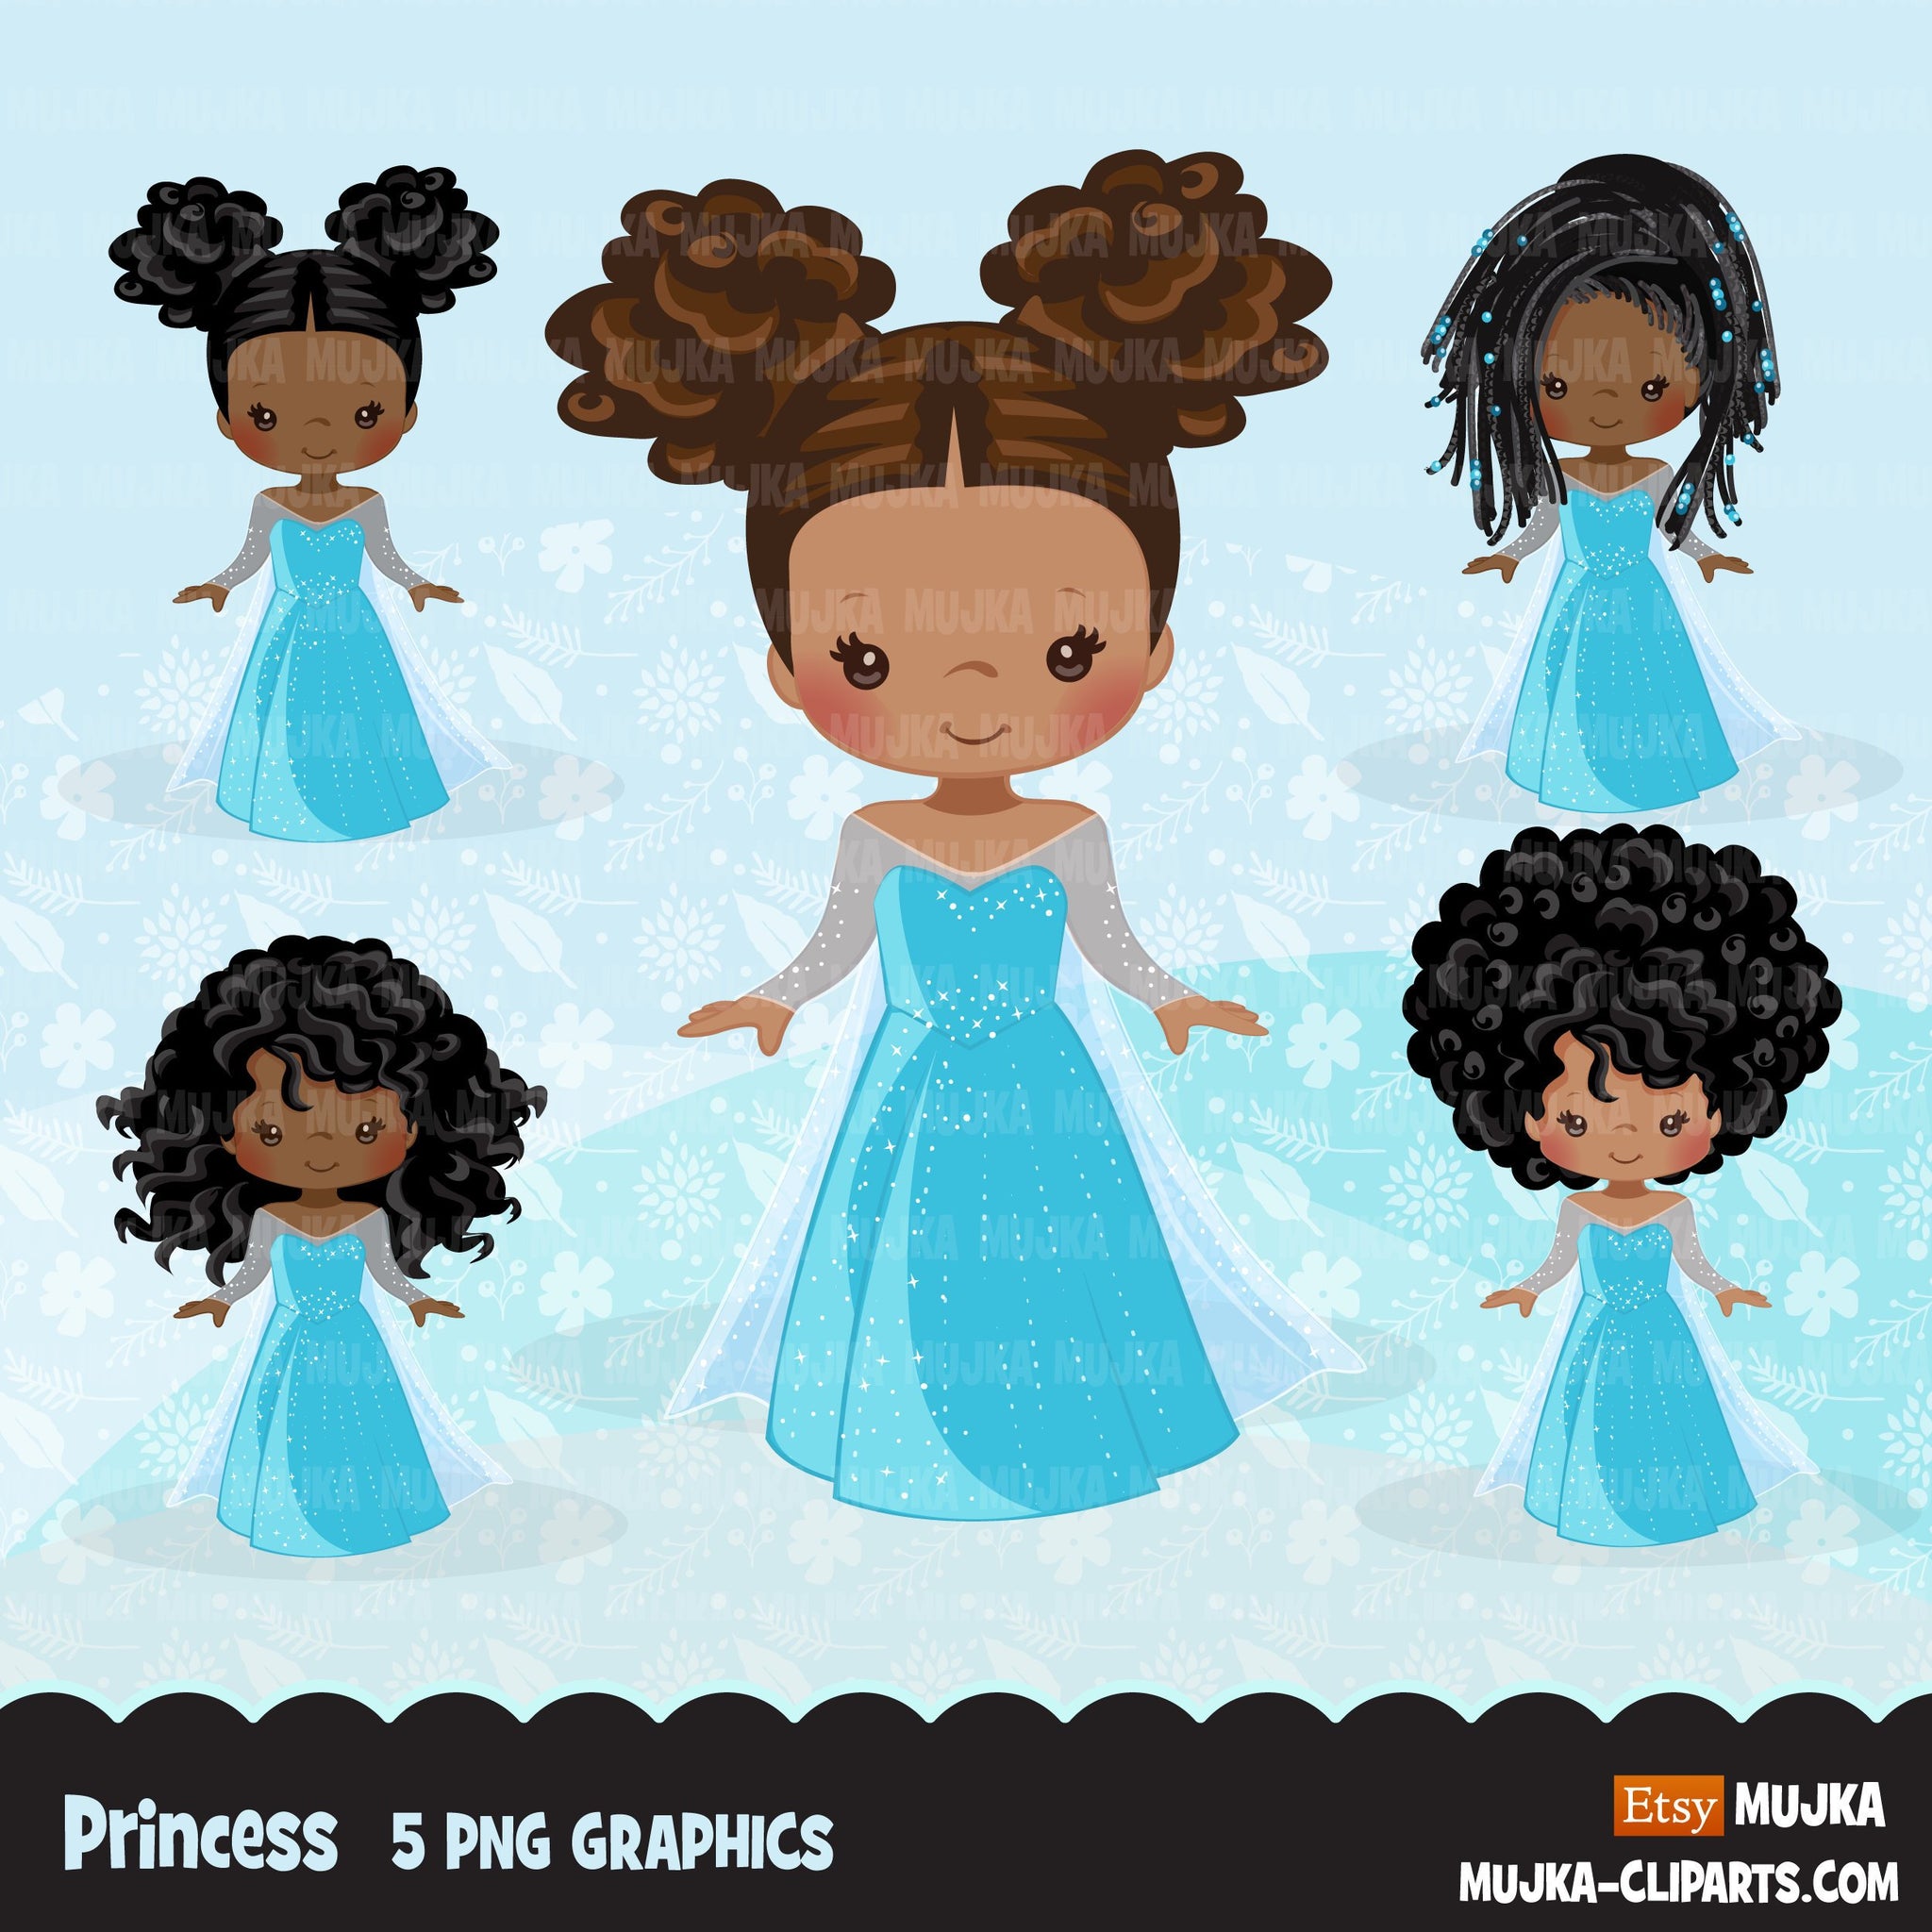 Clipart de princesa preta, gráficos de contos de fadas, livro de histórias para meninas, vestido de princesa azul claro, clipart de uso comercial